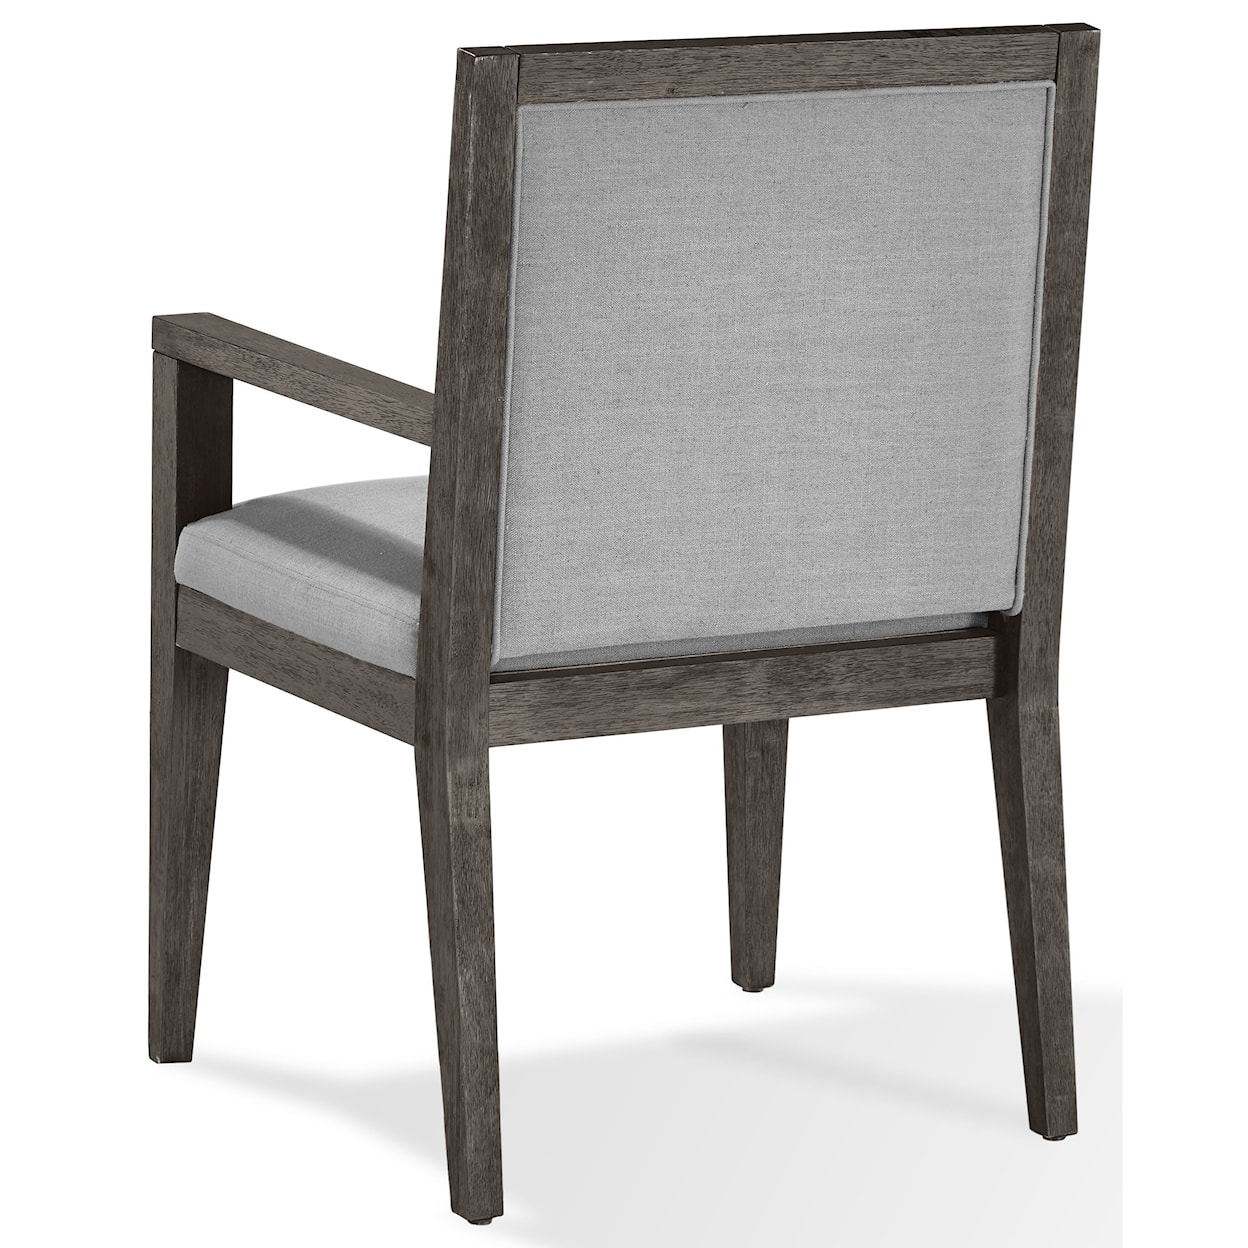 Modus International Modesto Wood Framed Arm Chair in French Roast